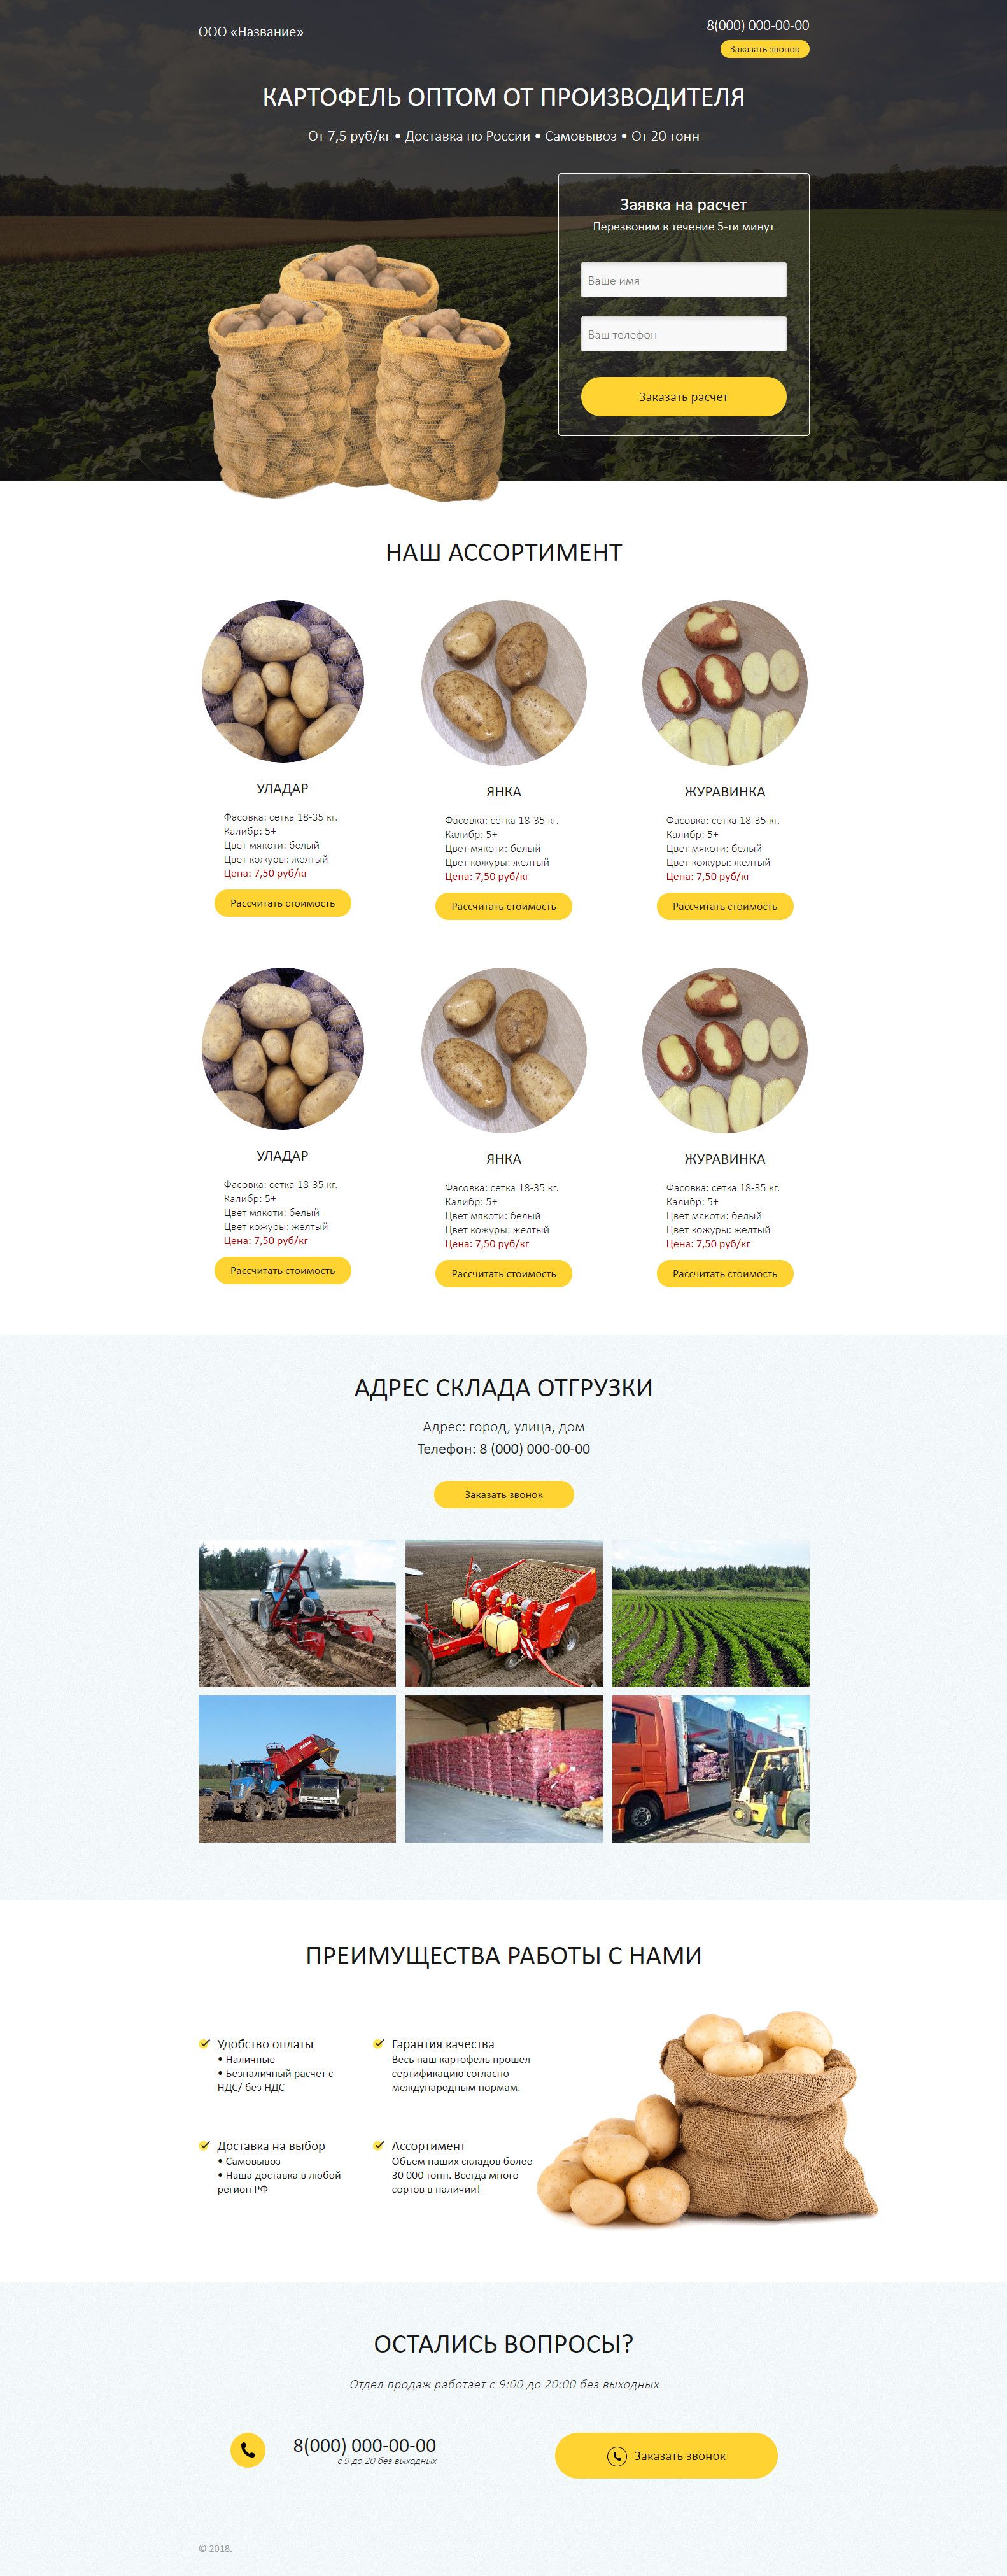 Landing page - Wholesale of potatoes